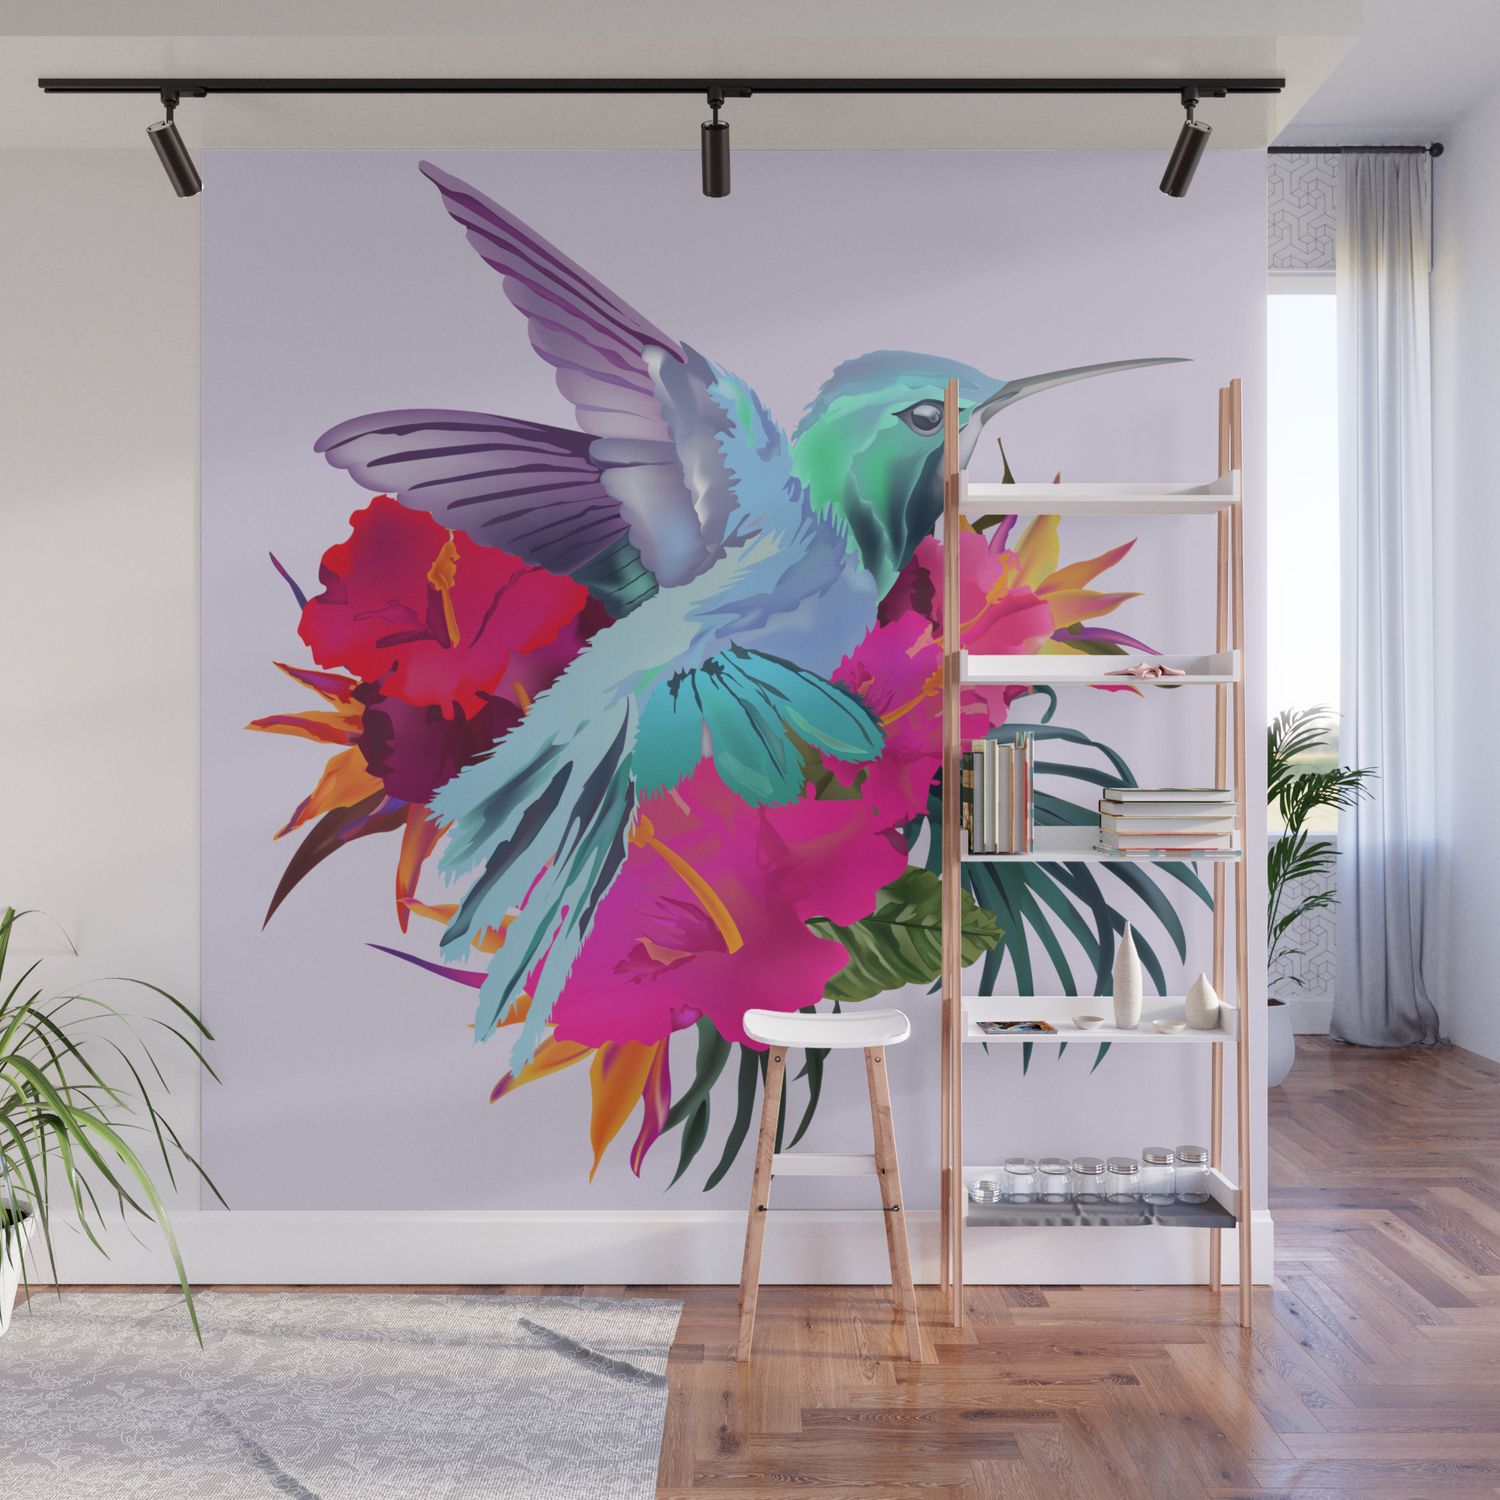 Hummingbird Wall Muralosiris De Los Santos | Society6 For Best And Newest Hummingbird Wall Art (View 19 of 20)